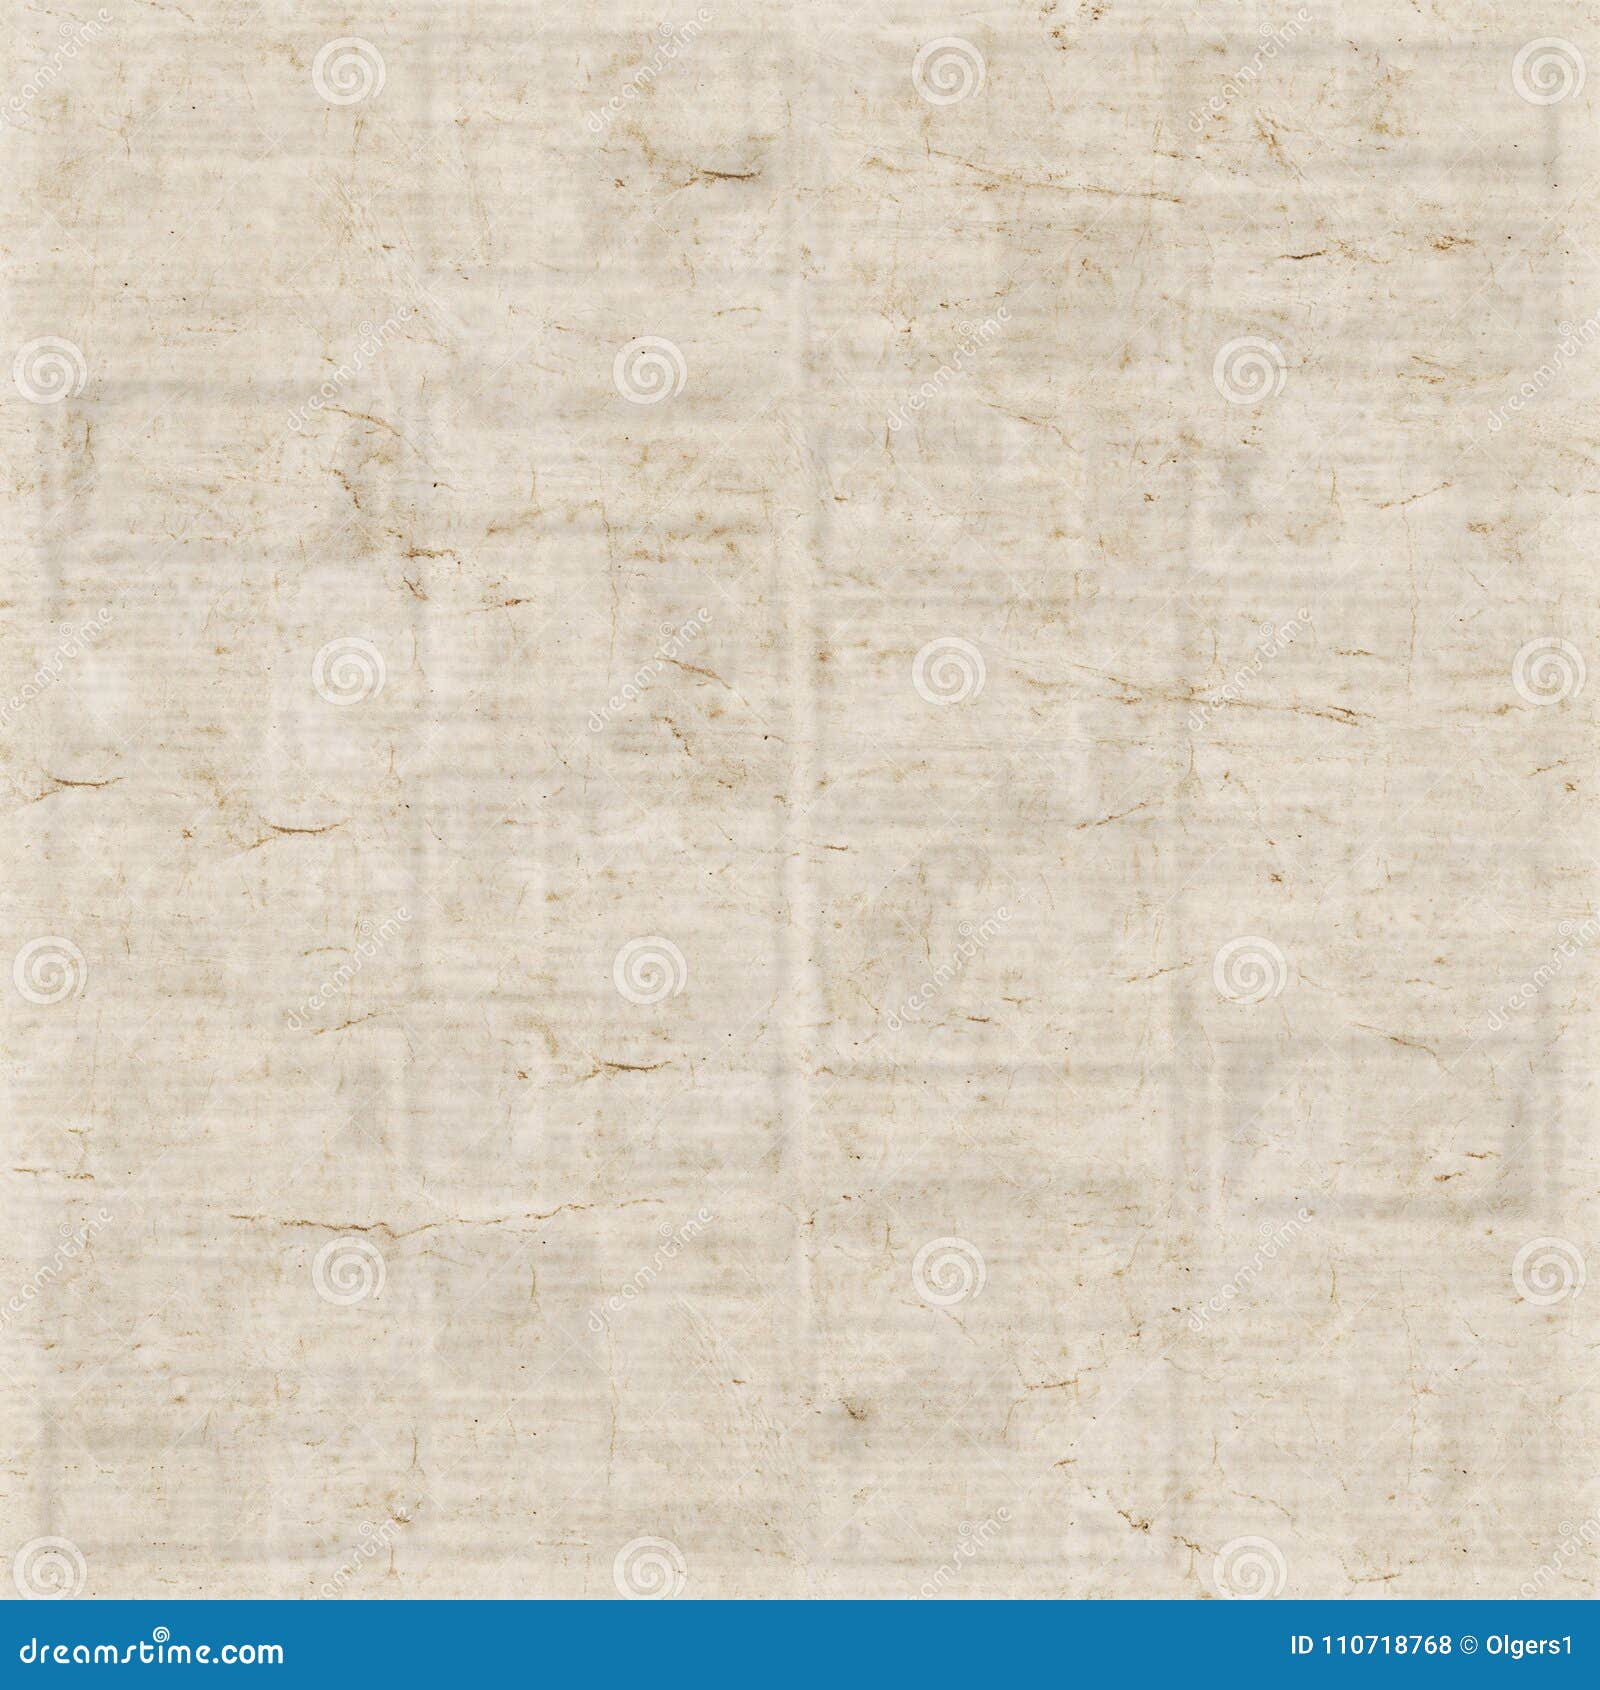 old newspaper blank